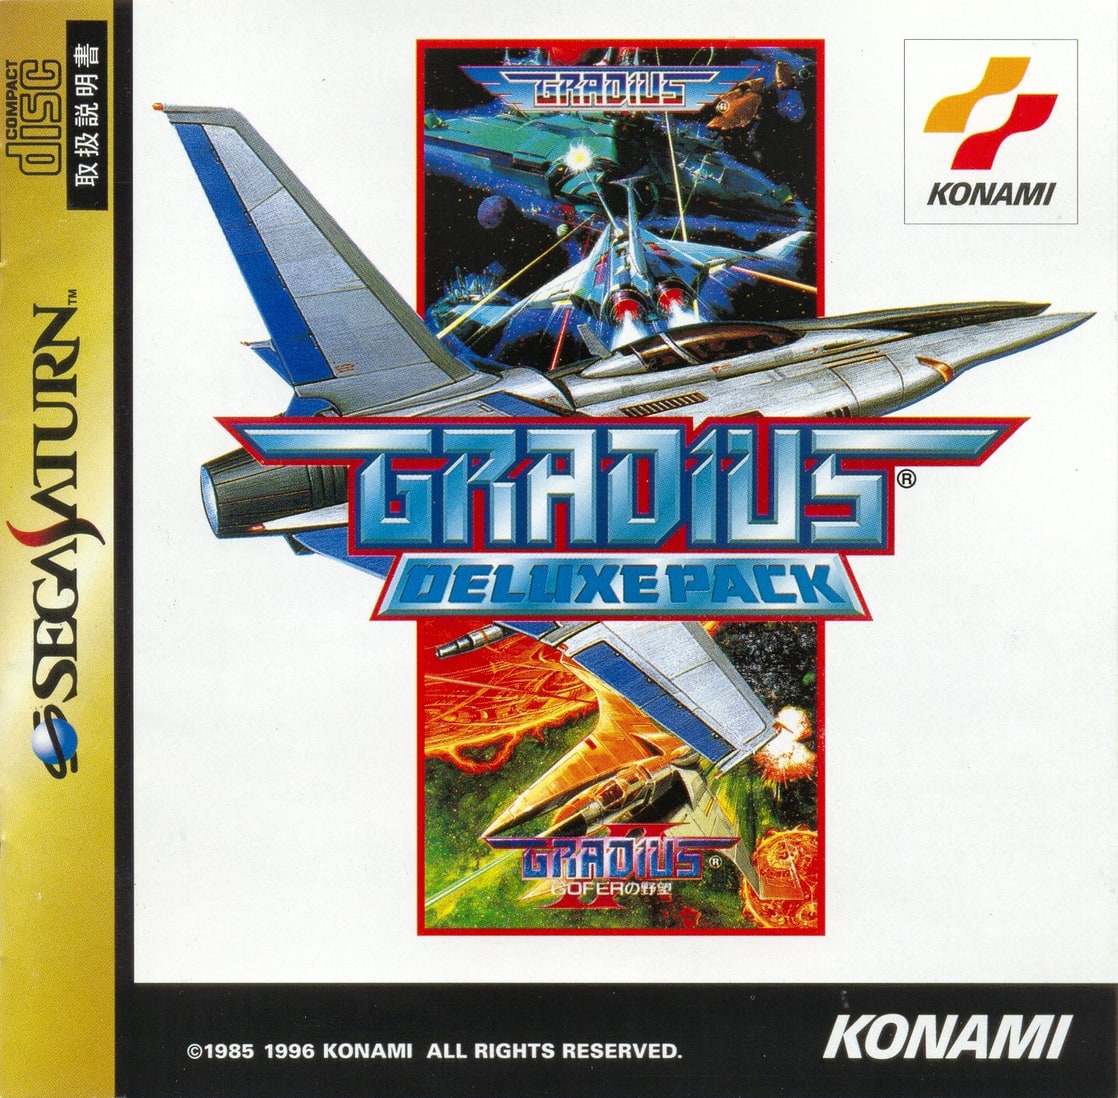 Gradius Deluxe Pack for Saturn